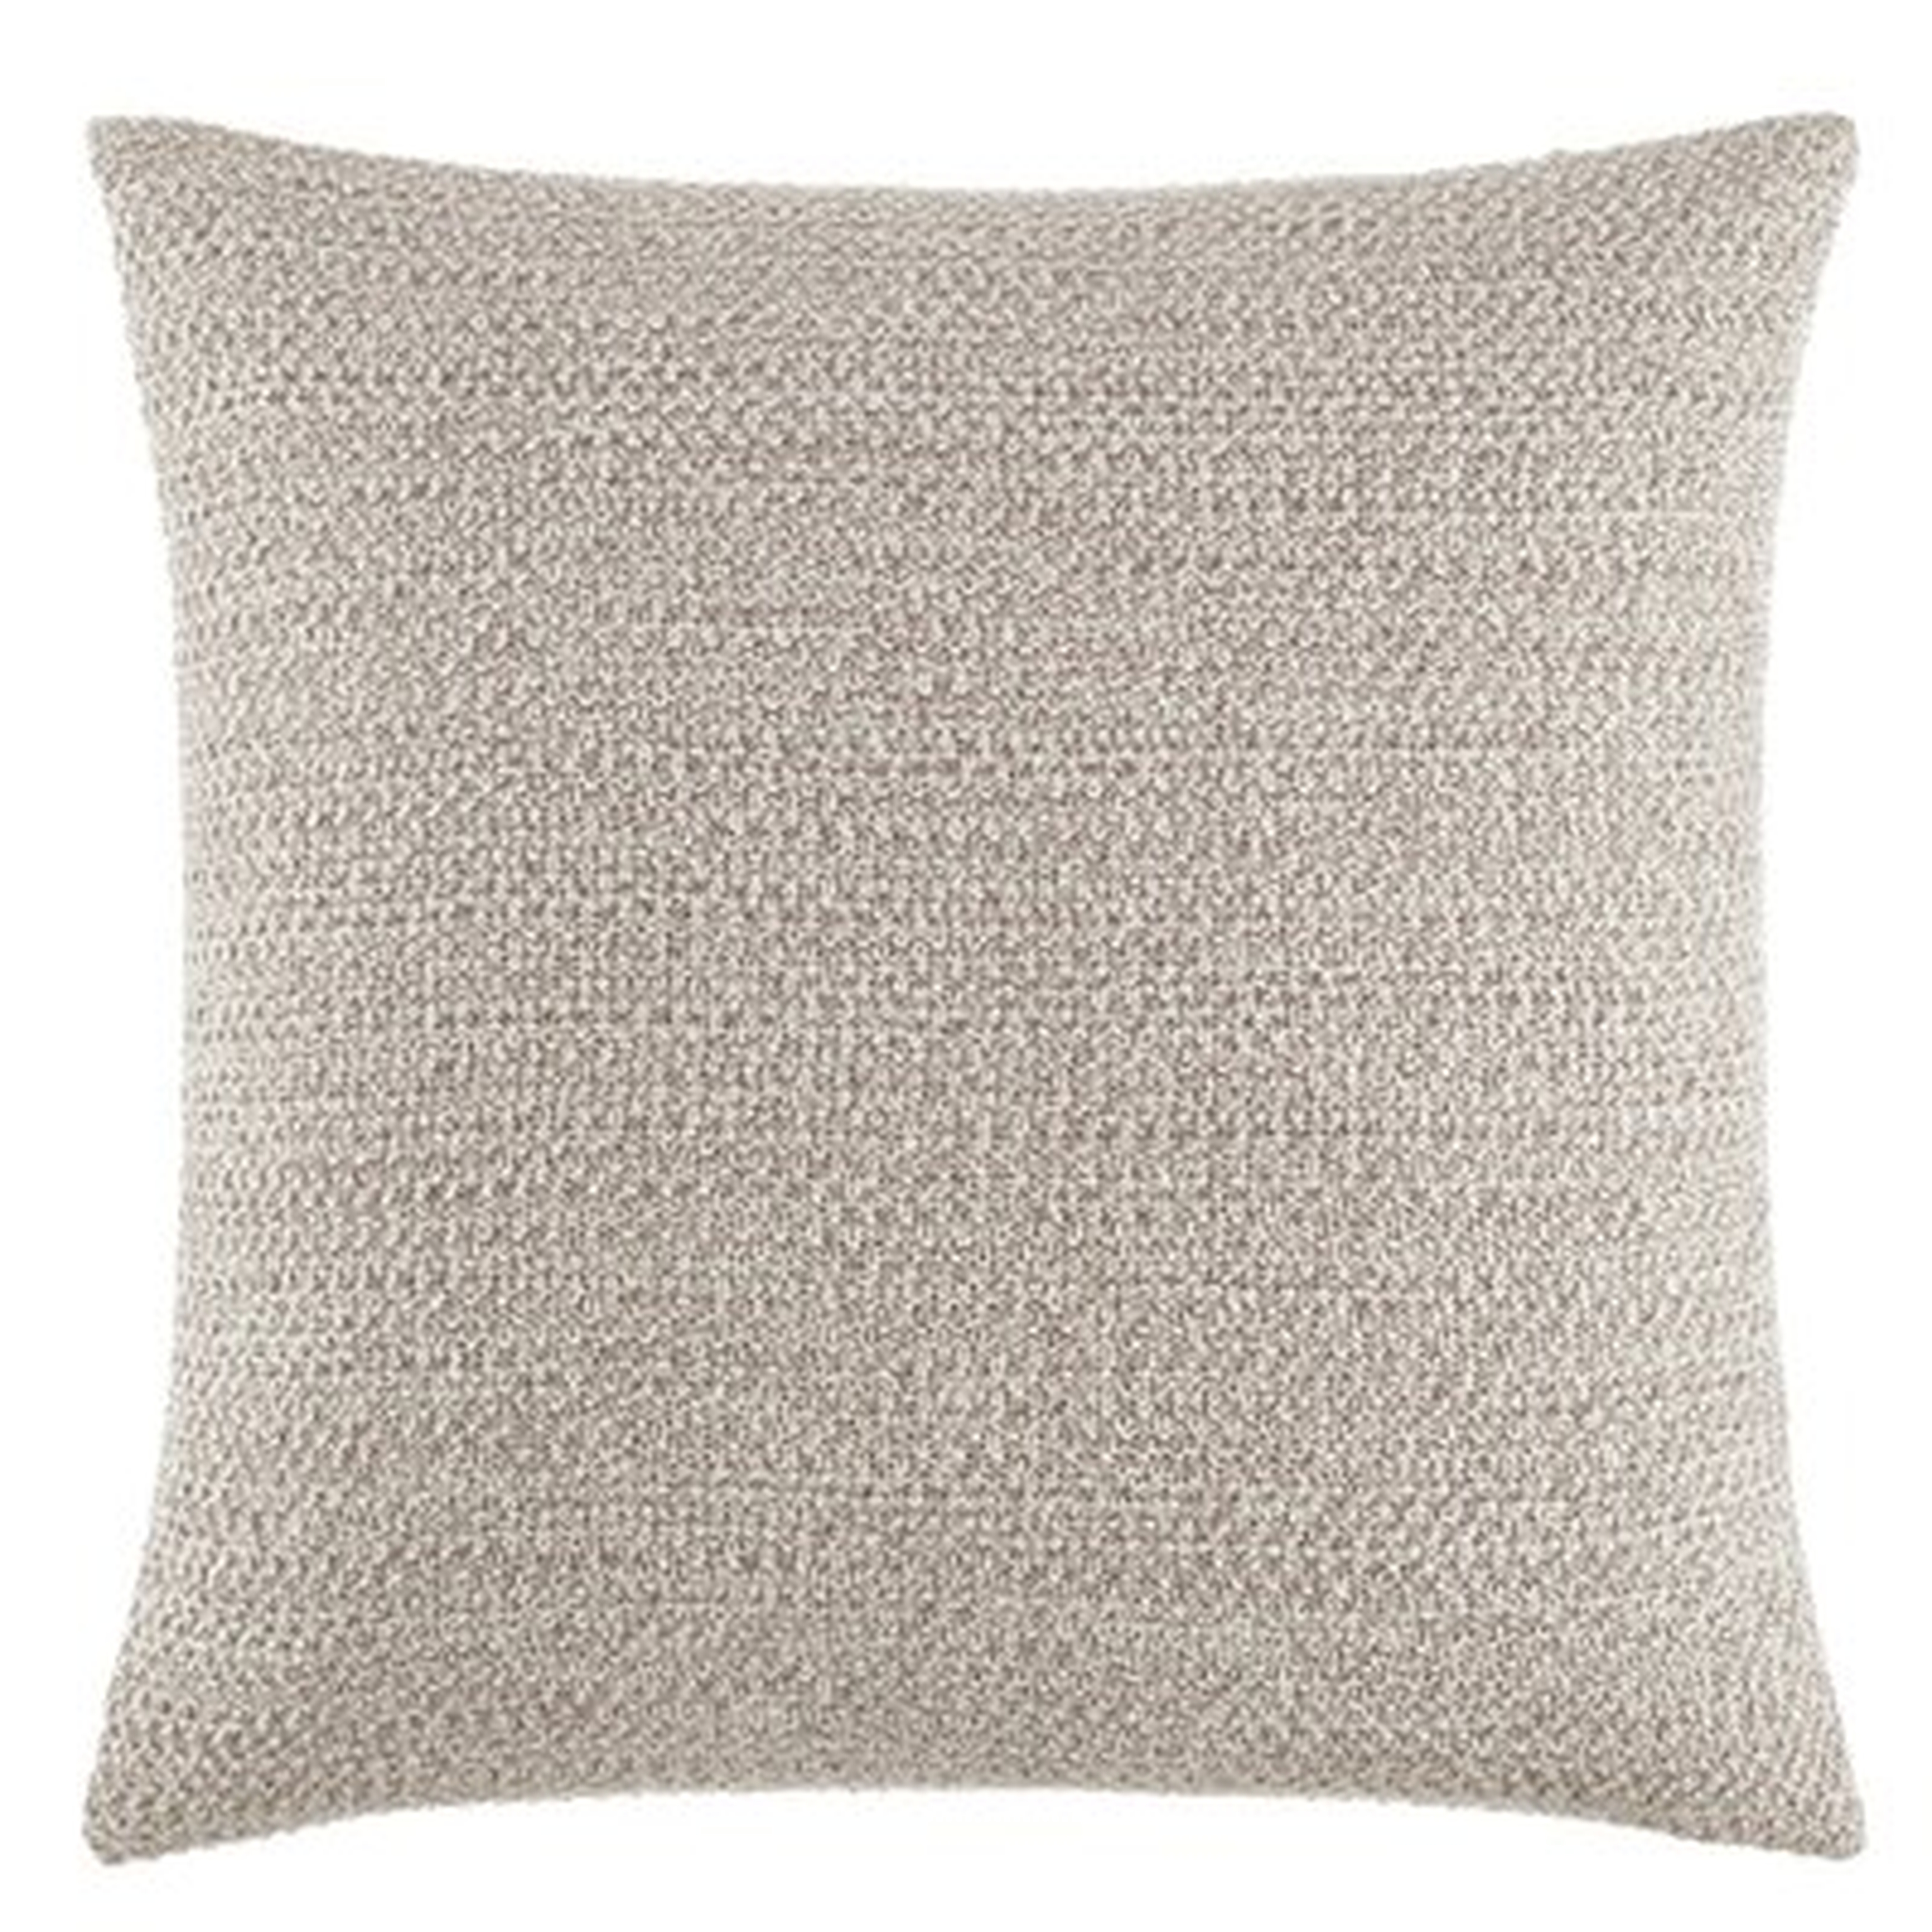 Casmalia Marled Knit Throw Pillow - Wayfair